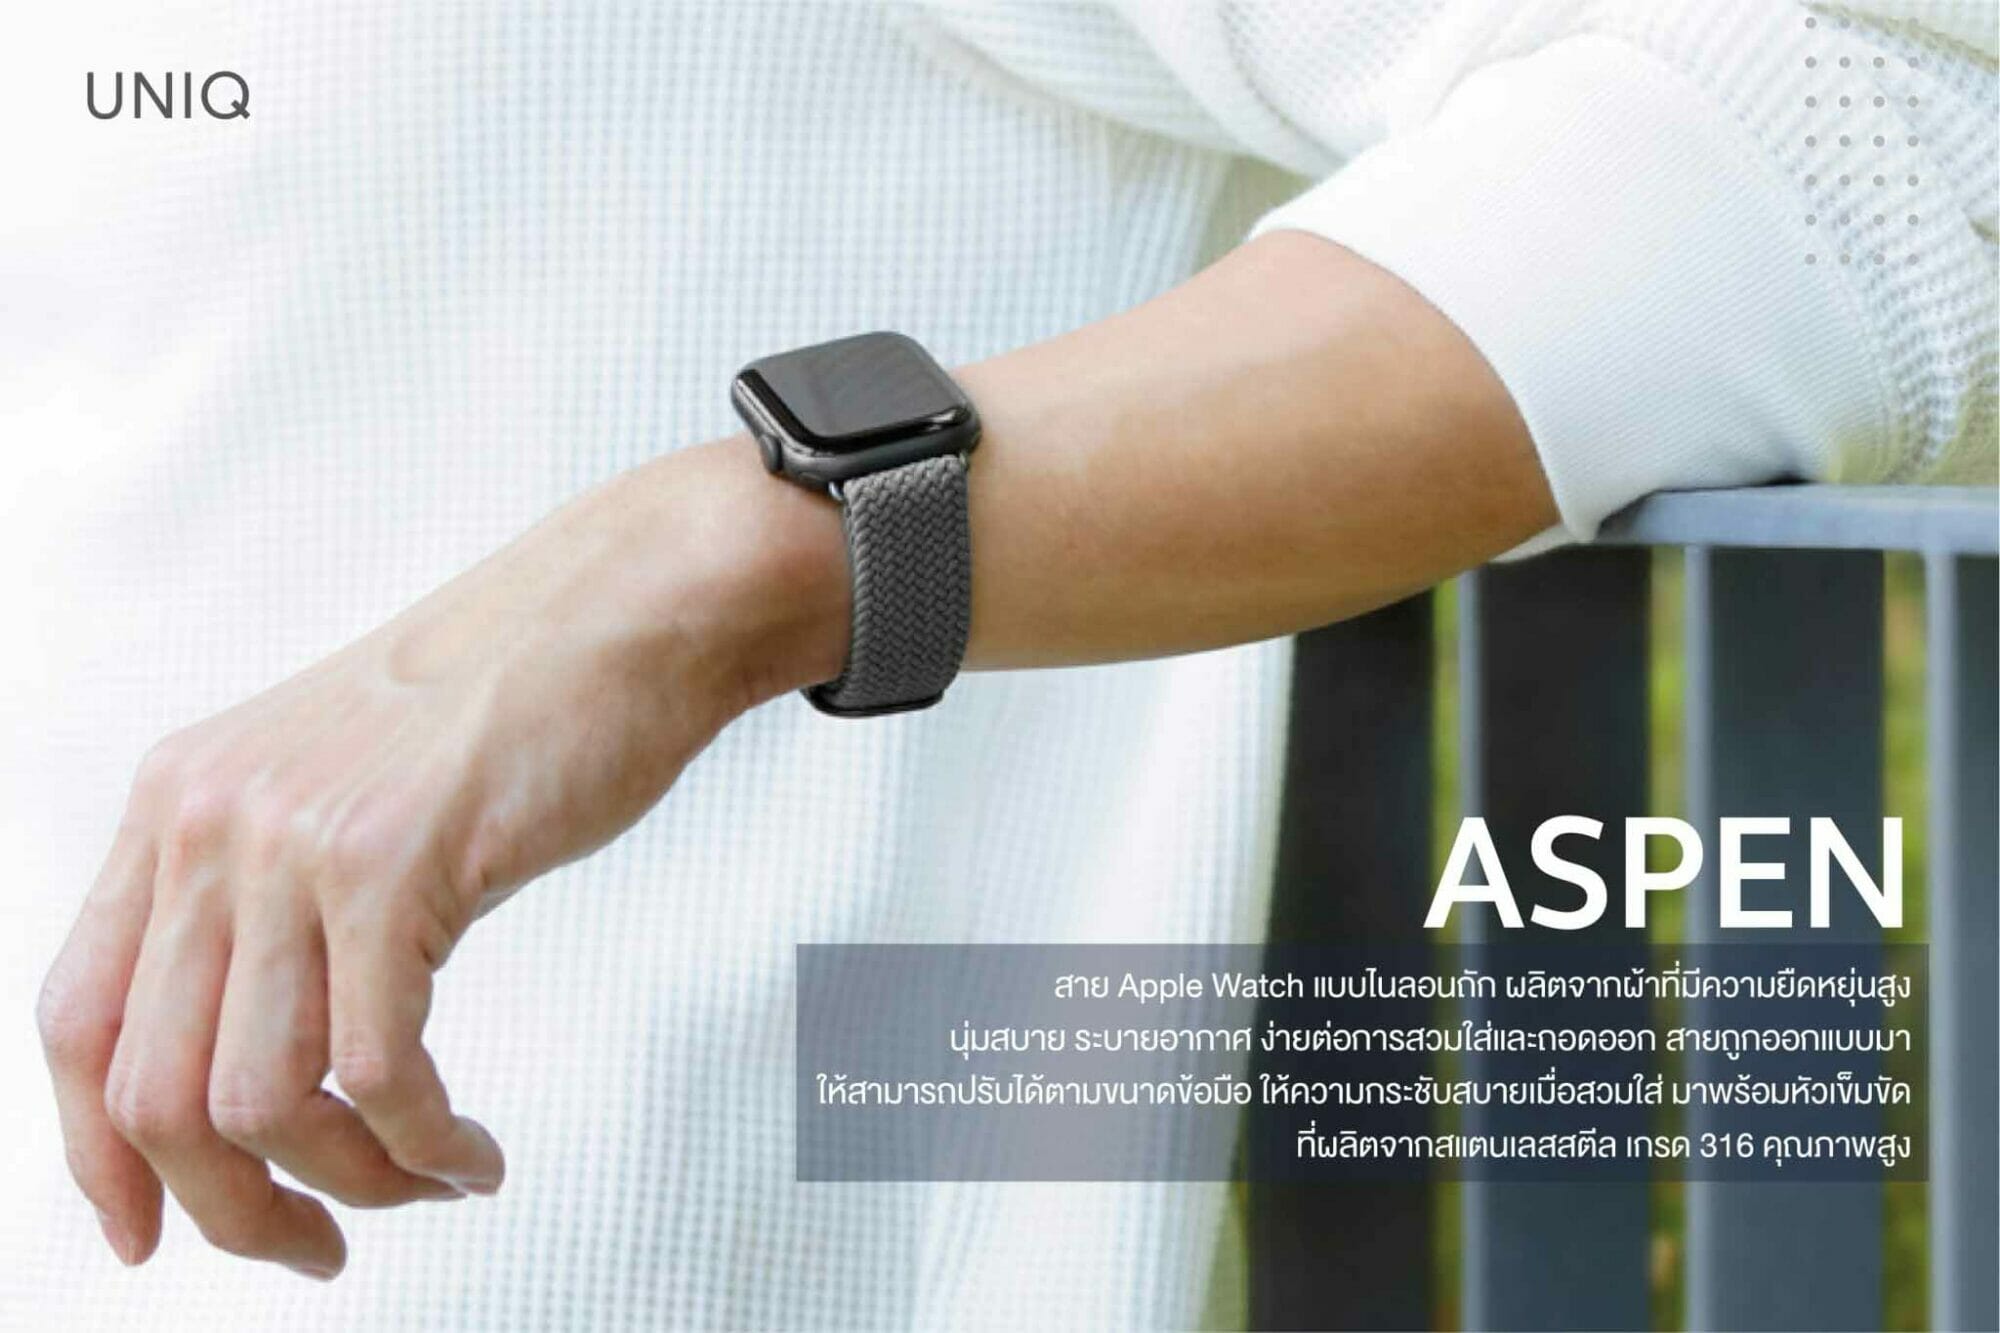 Apple Watch Strap และ Apple Watch Cases จากแบรนด์ Uniq โดดเด่นด้วยดีไซน์ที่ สปอร์ต เรียบหรู ดูทันสมัย 9